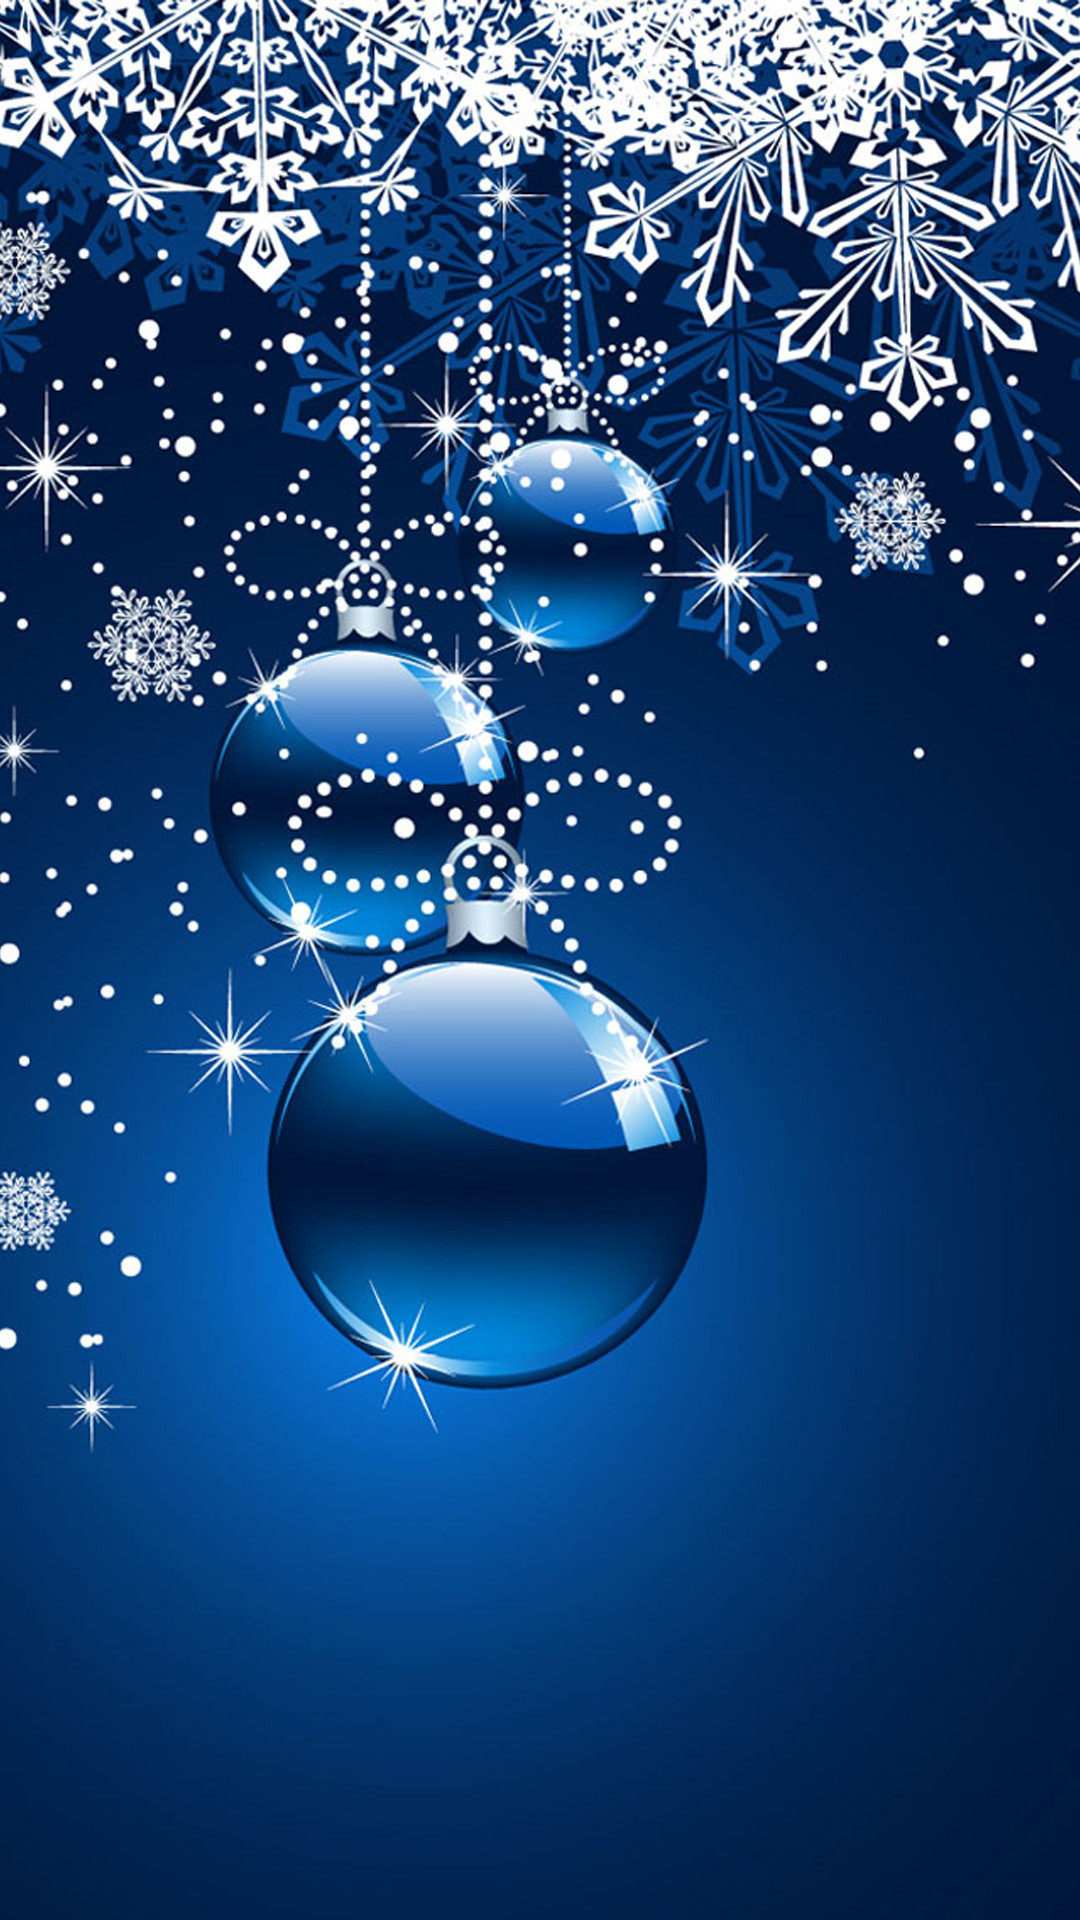 1080x1920 Christmas snowflake iPhone 6 plus wallpaper - balls, floating ornaments -  christmas snowflake iphone 6 plus wallpaper: Christmas themed iPhone 6 plus  ...